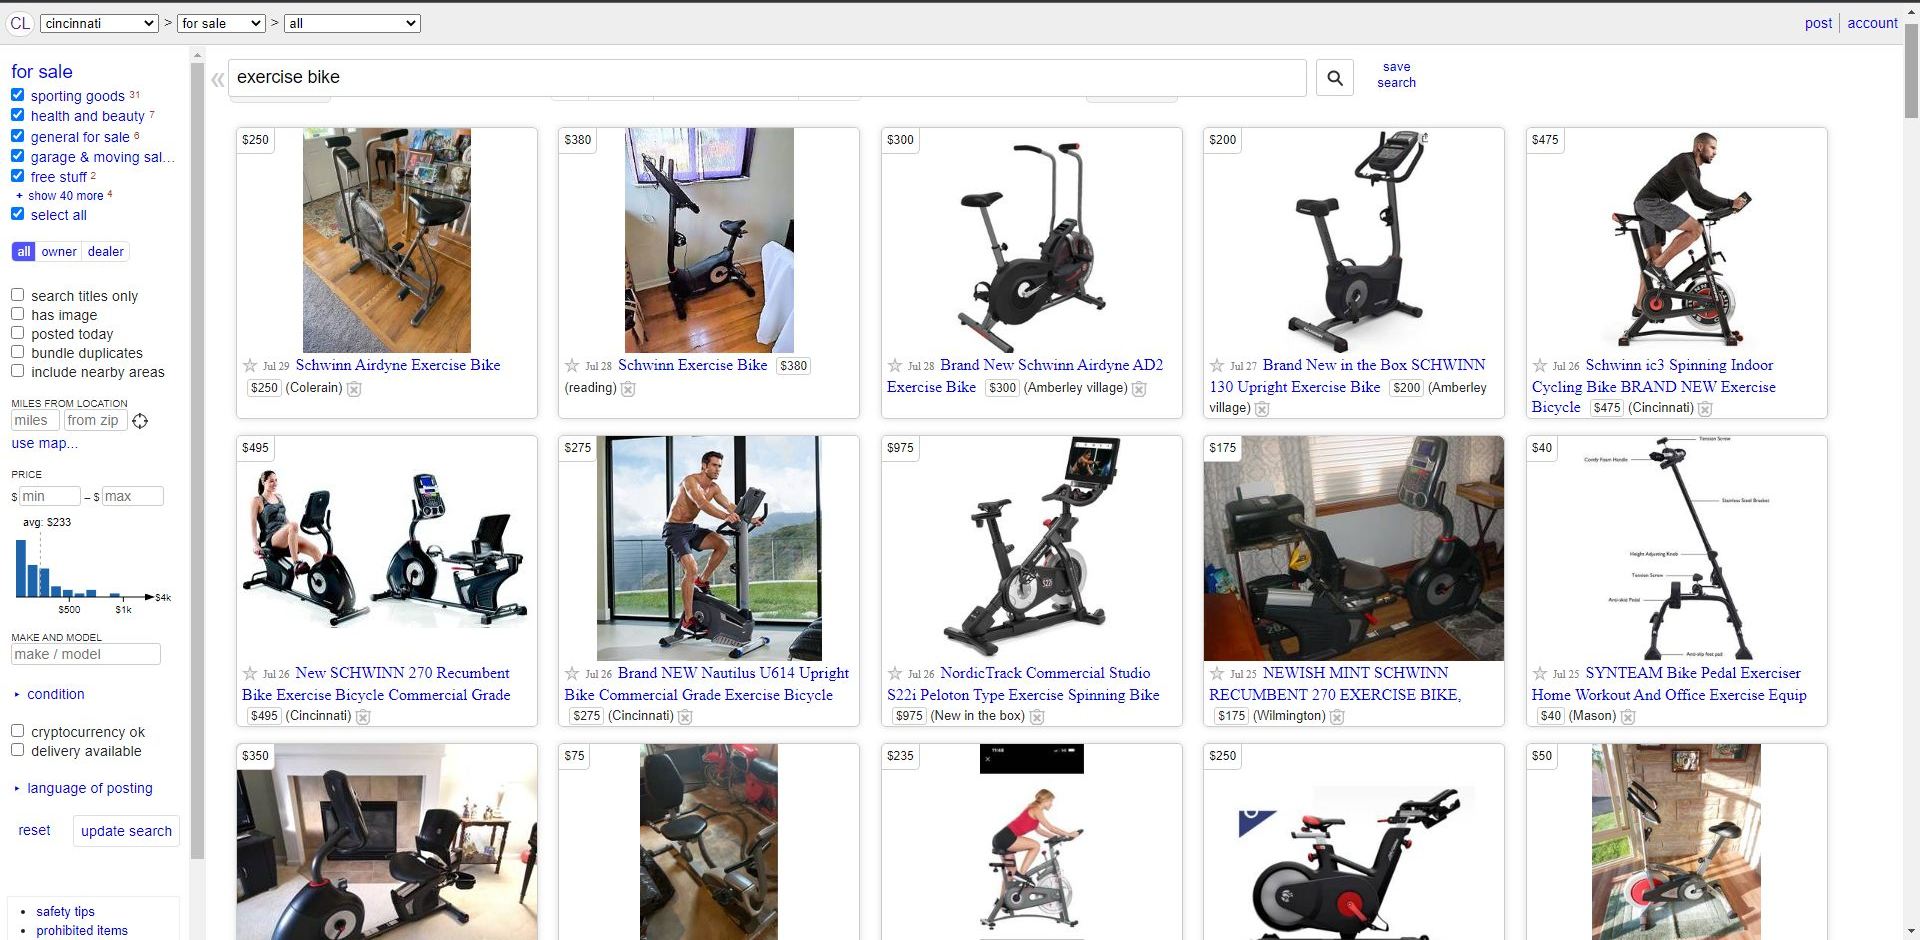 buy used exercise equipment on craigslist